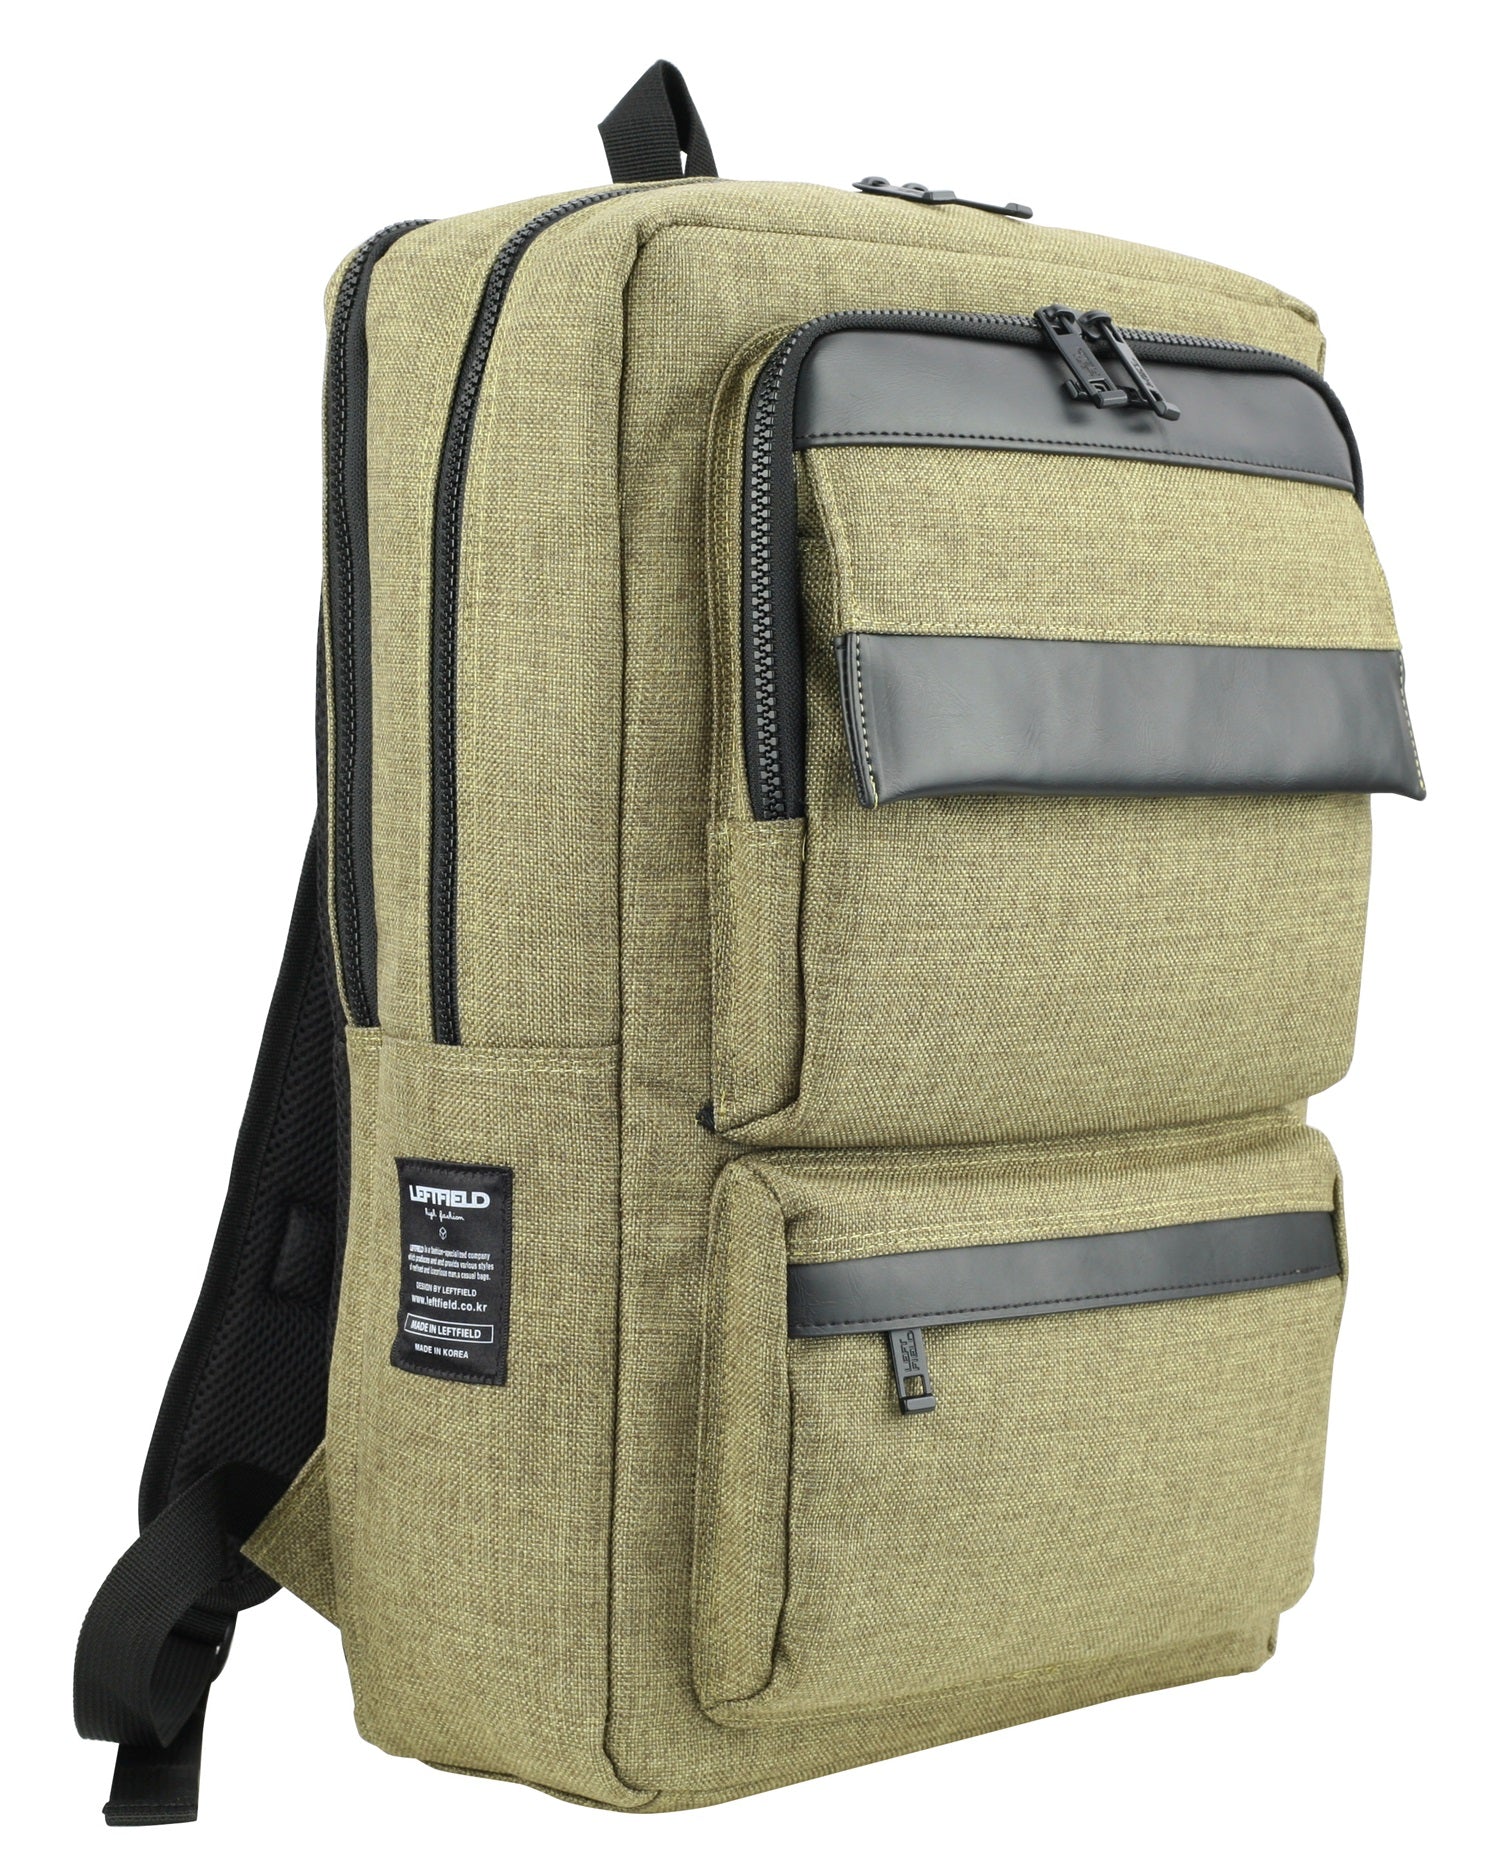 Khaki Green Canvas Backpacks School Laptop Travel Camping Rucksacks